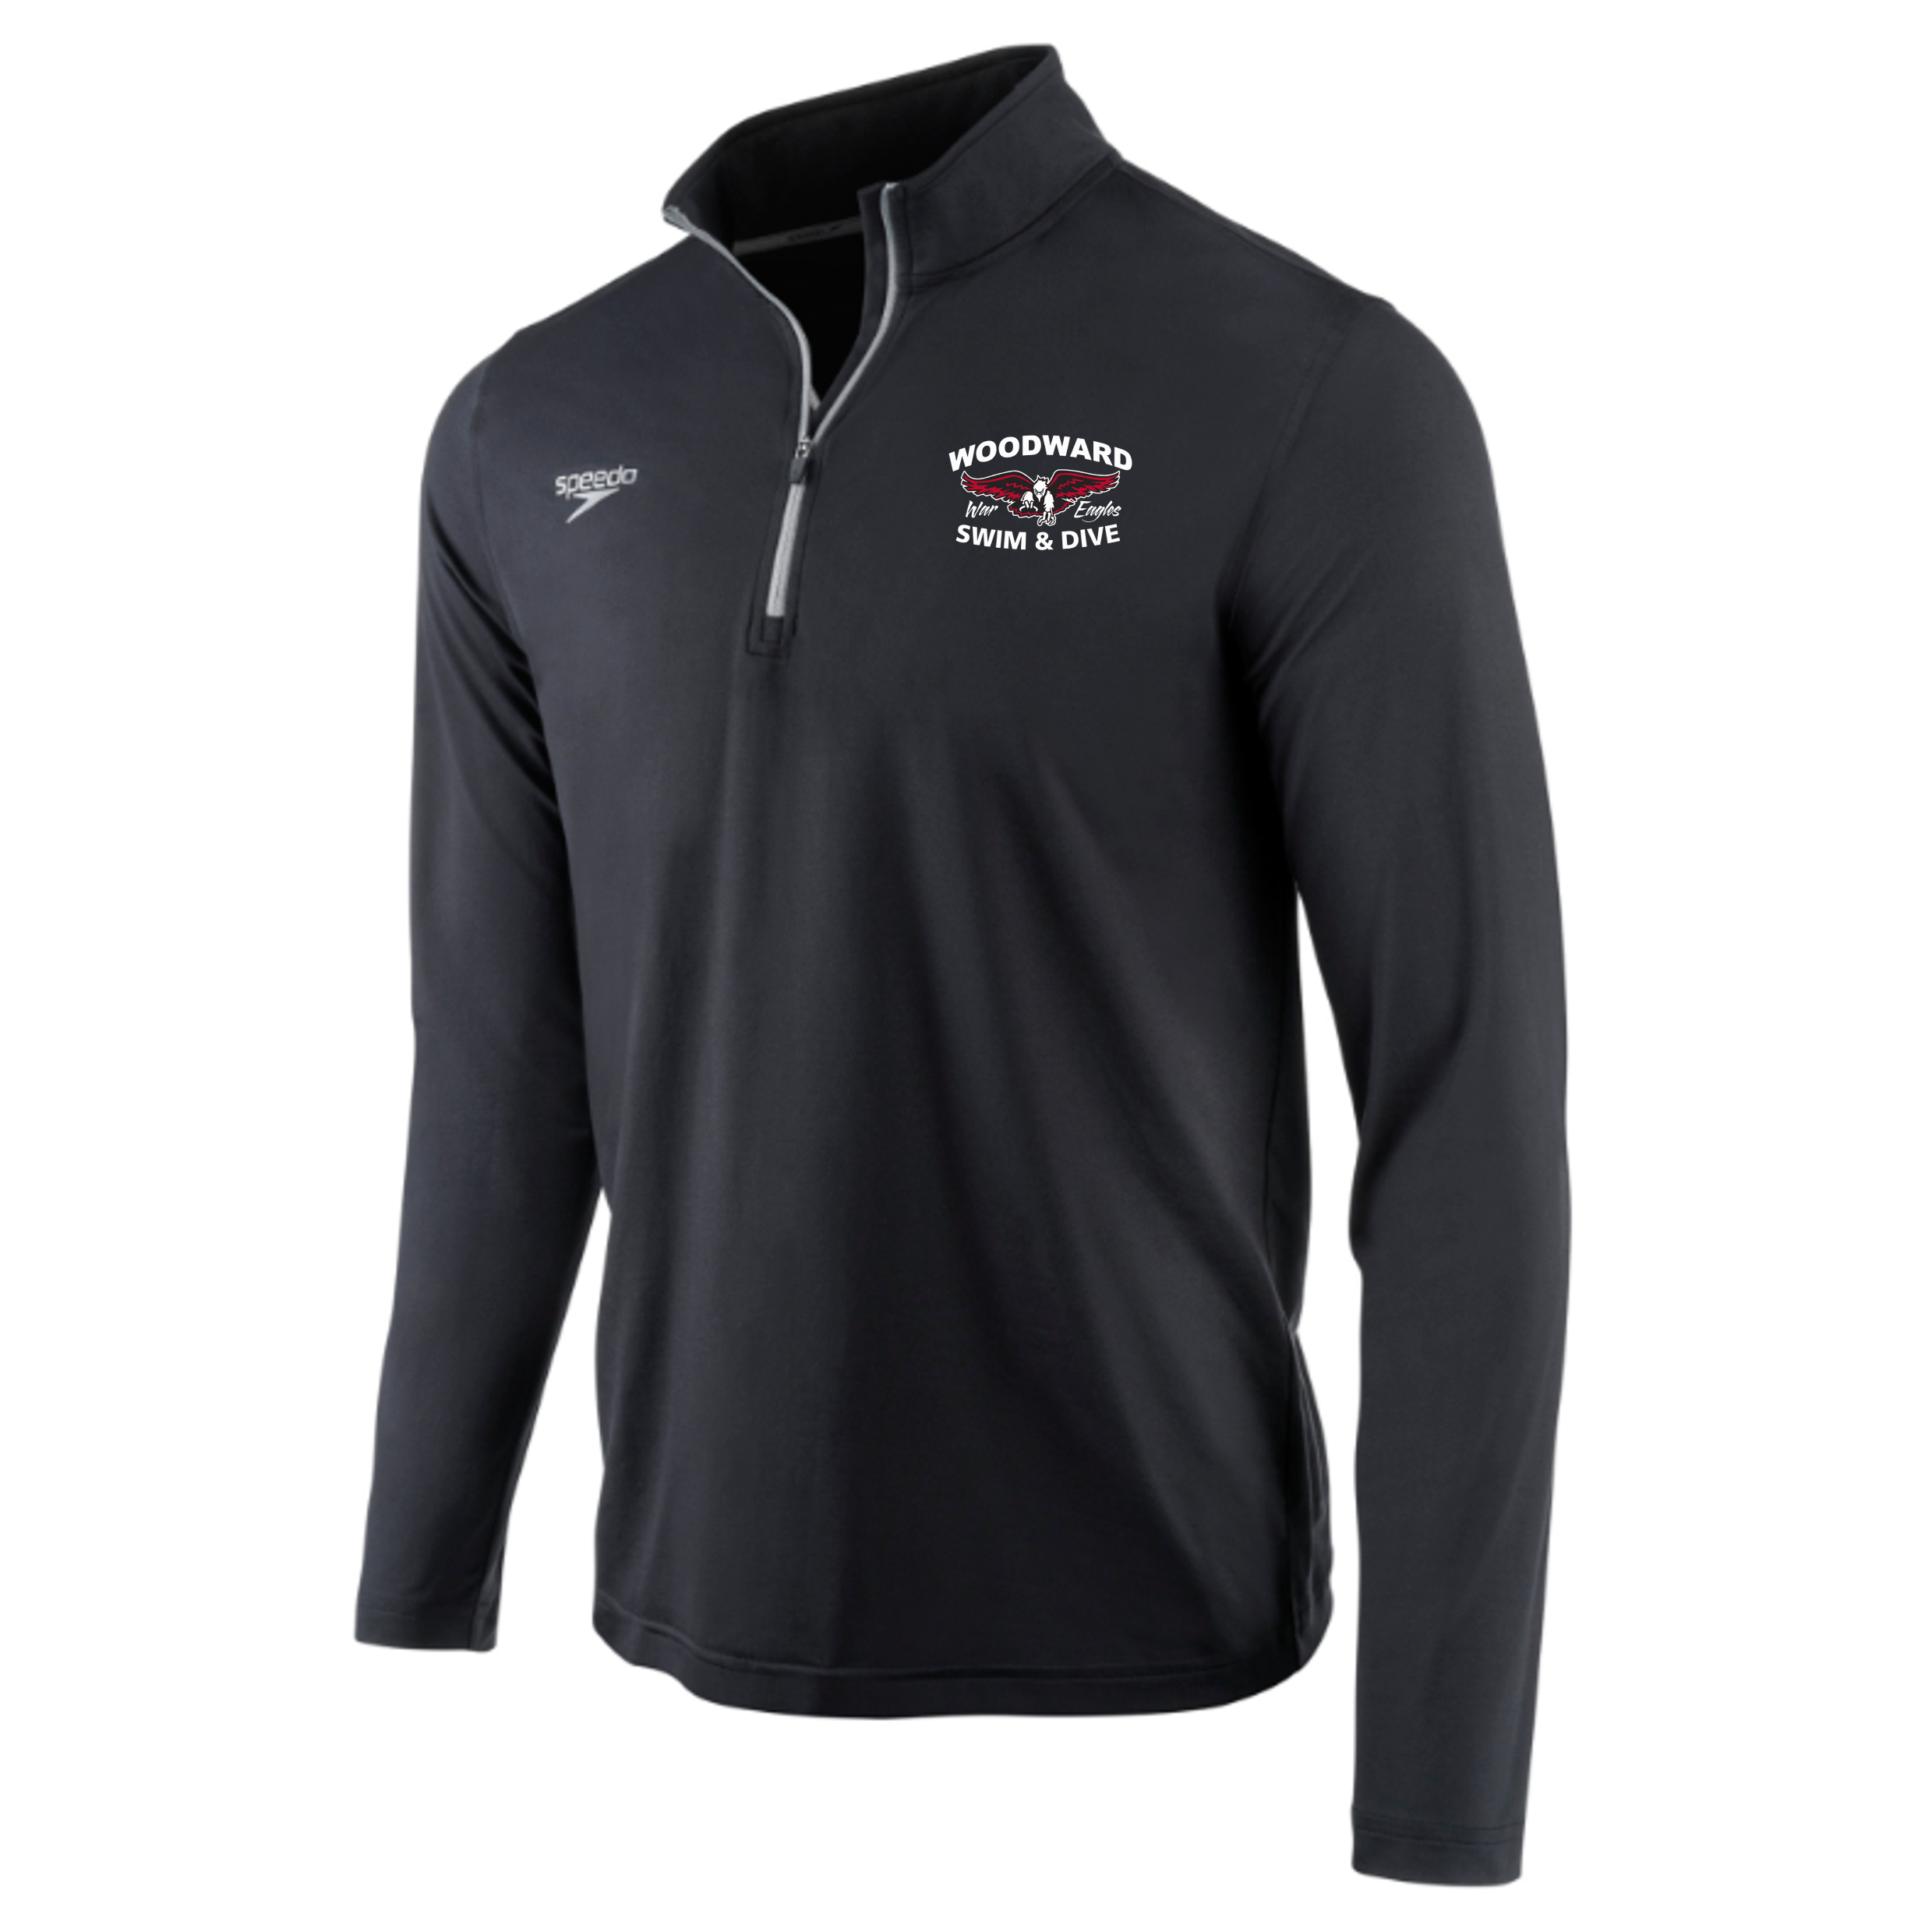 Speedo Jersey 1/4 Zip Long Sleeve T-Shirt (Customized) - Woodward